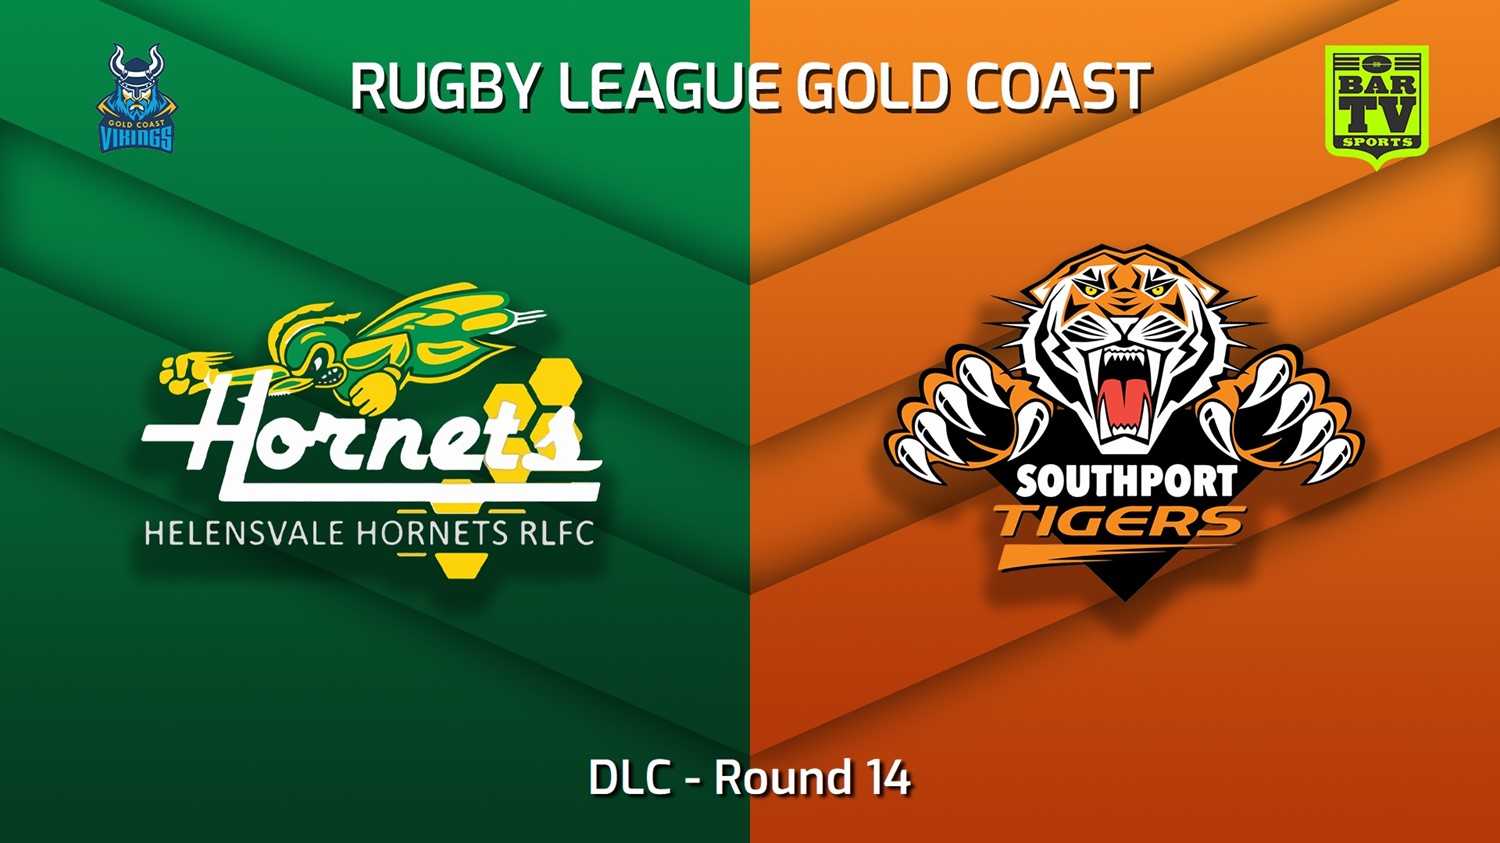 220717-Gold Coast Round 14 - DLC - Helensvale Hornets v Southport Tigers Slate Image